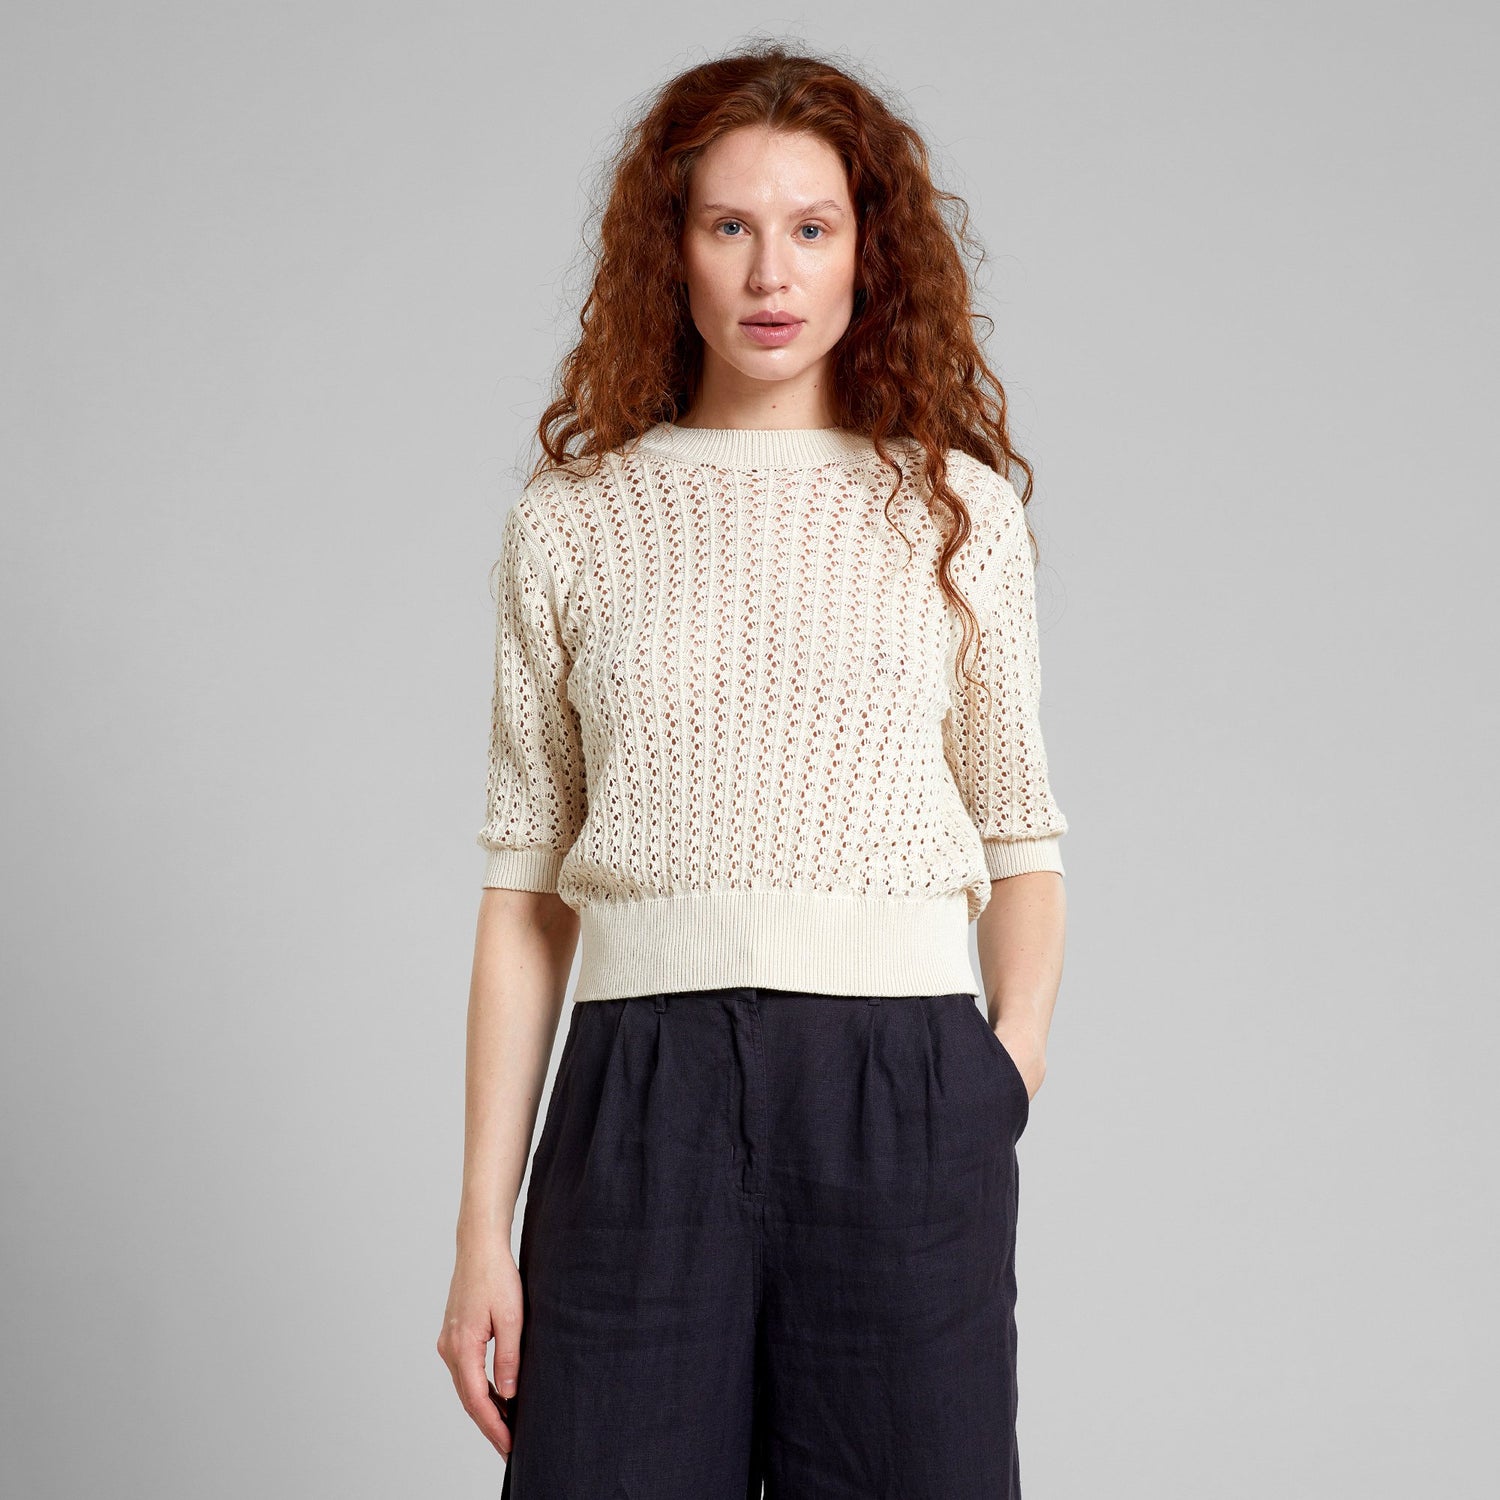 Strick-T-Shirt Flen Crochet in Vanilla White